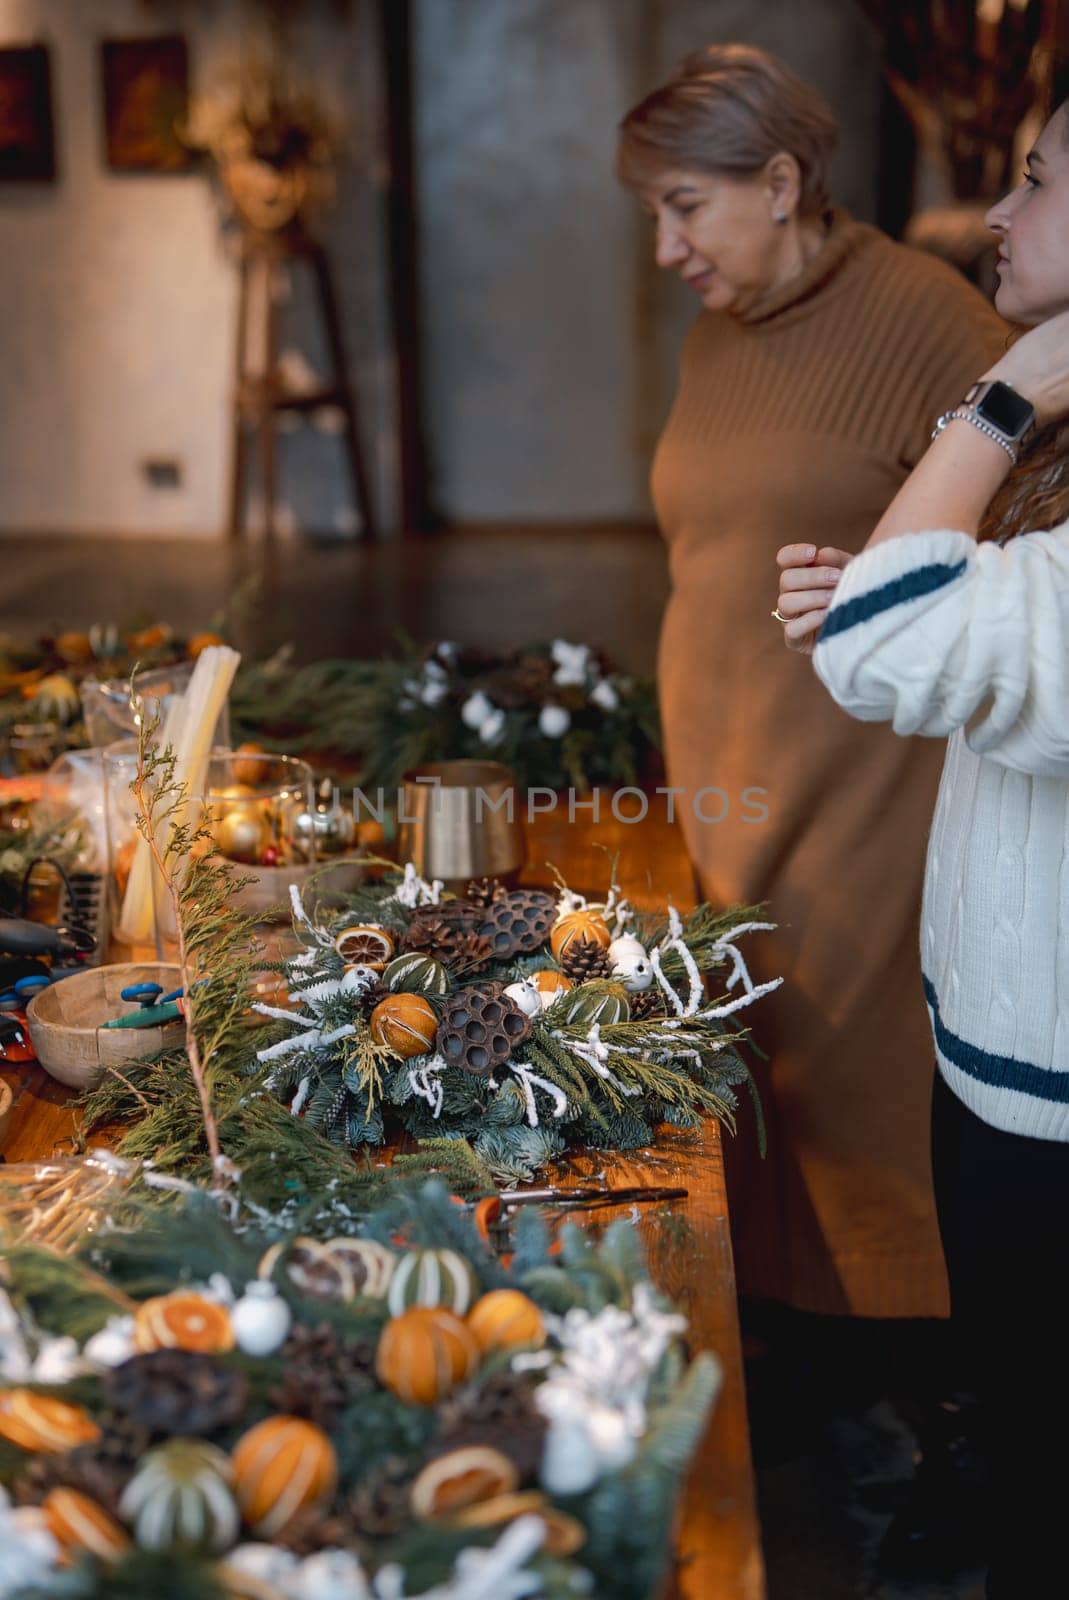 The Christmas spirit fills the flower and holiday decor store. by teksomolika